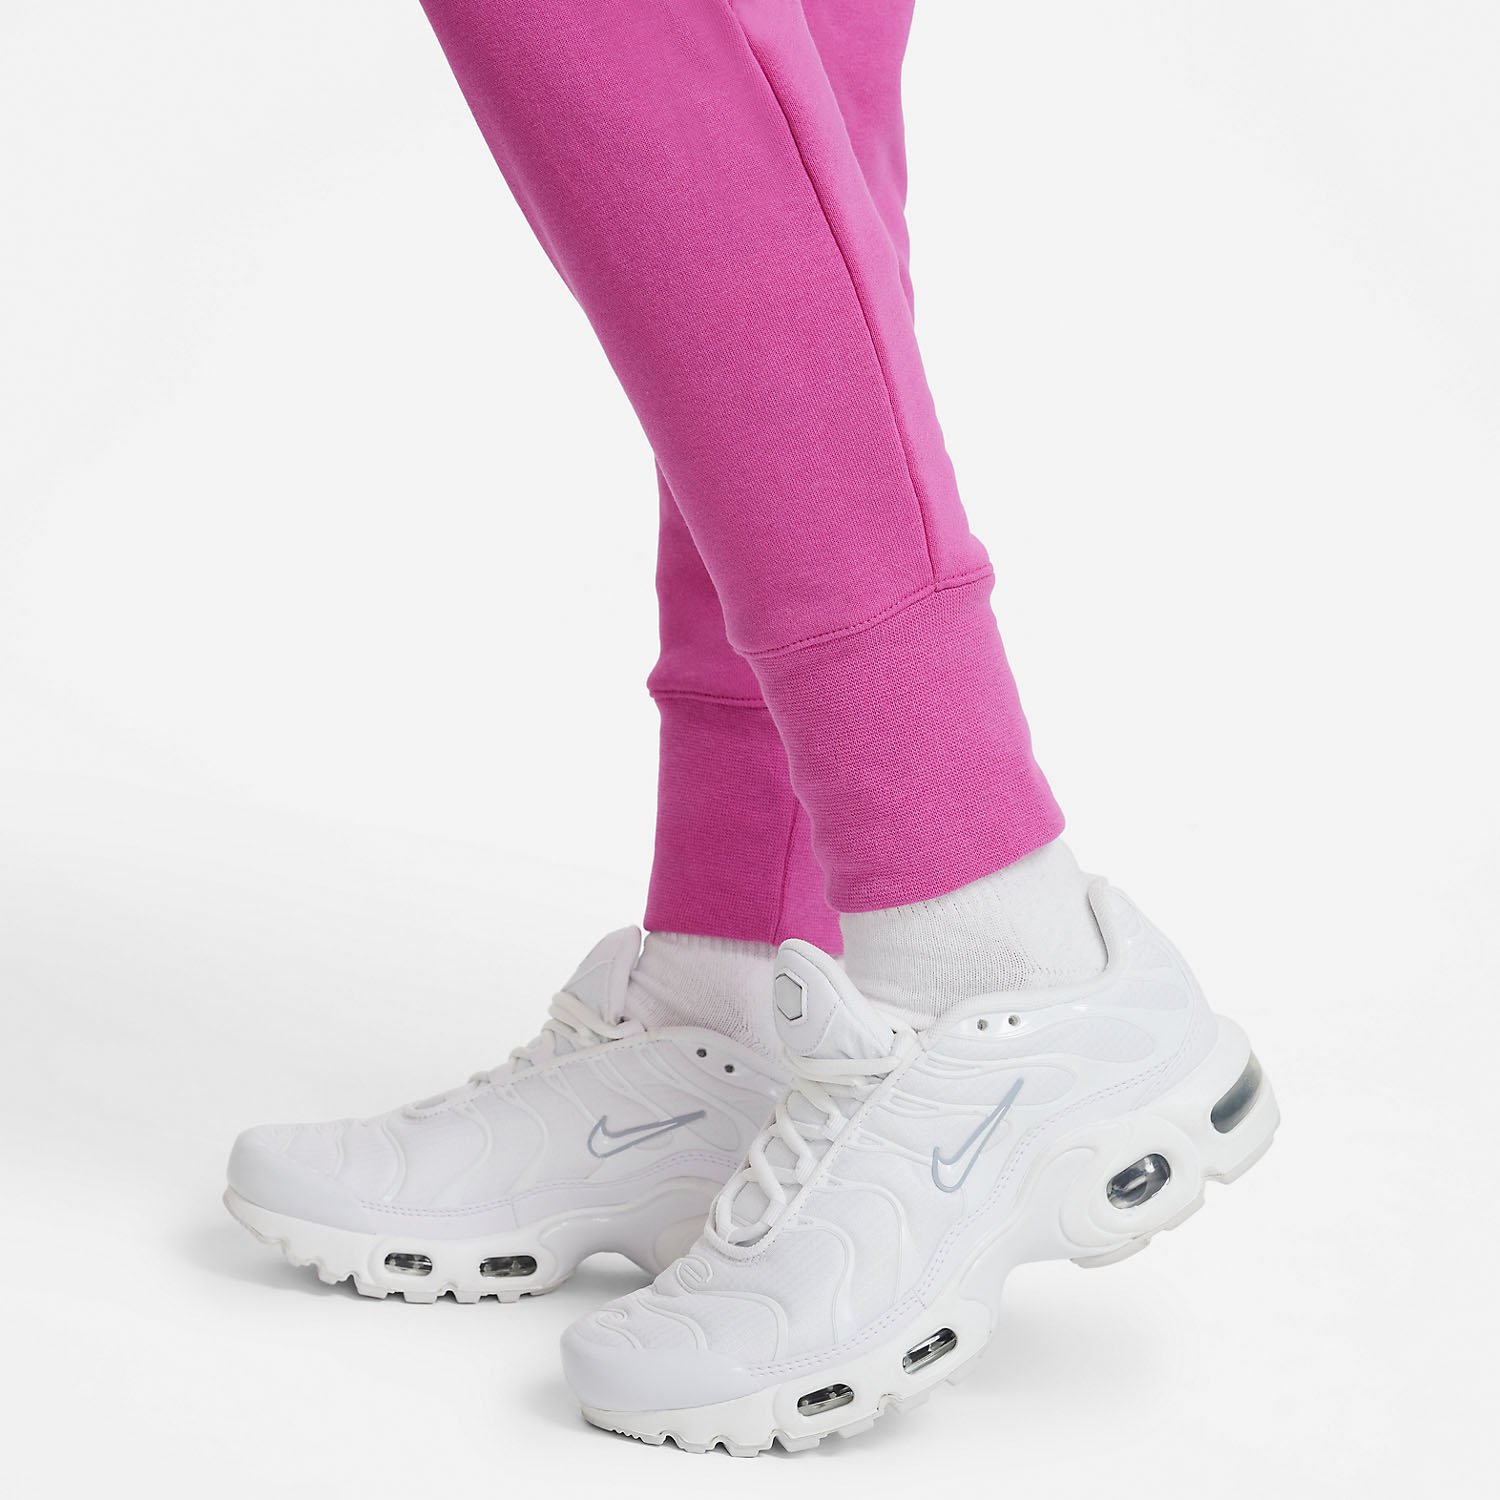 Nike Club Logo Girl\'s Tennis Pants - Active Fuchsia/White